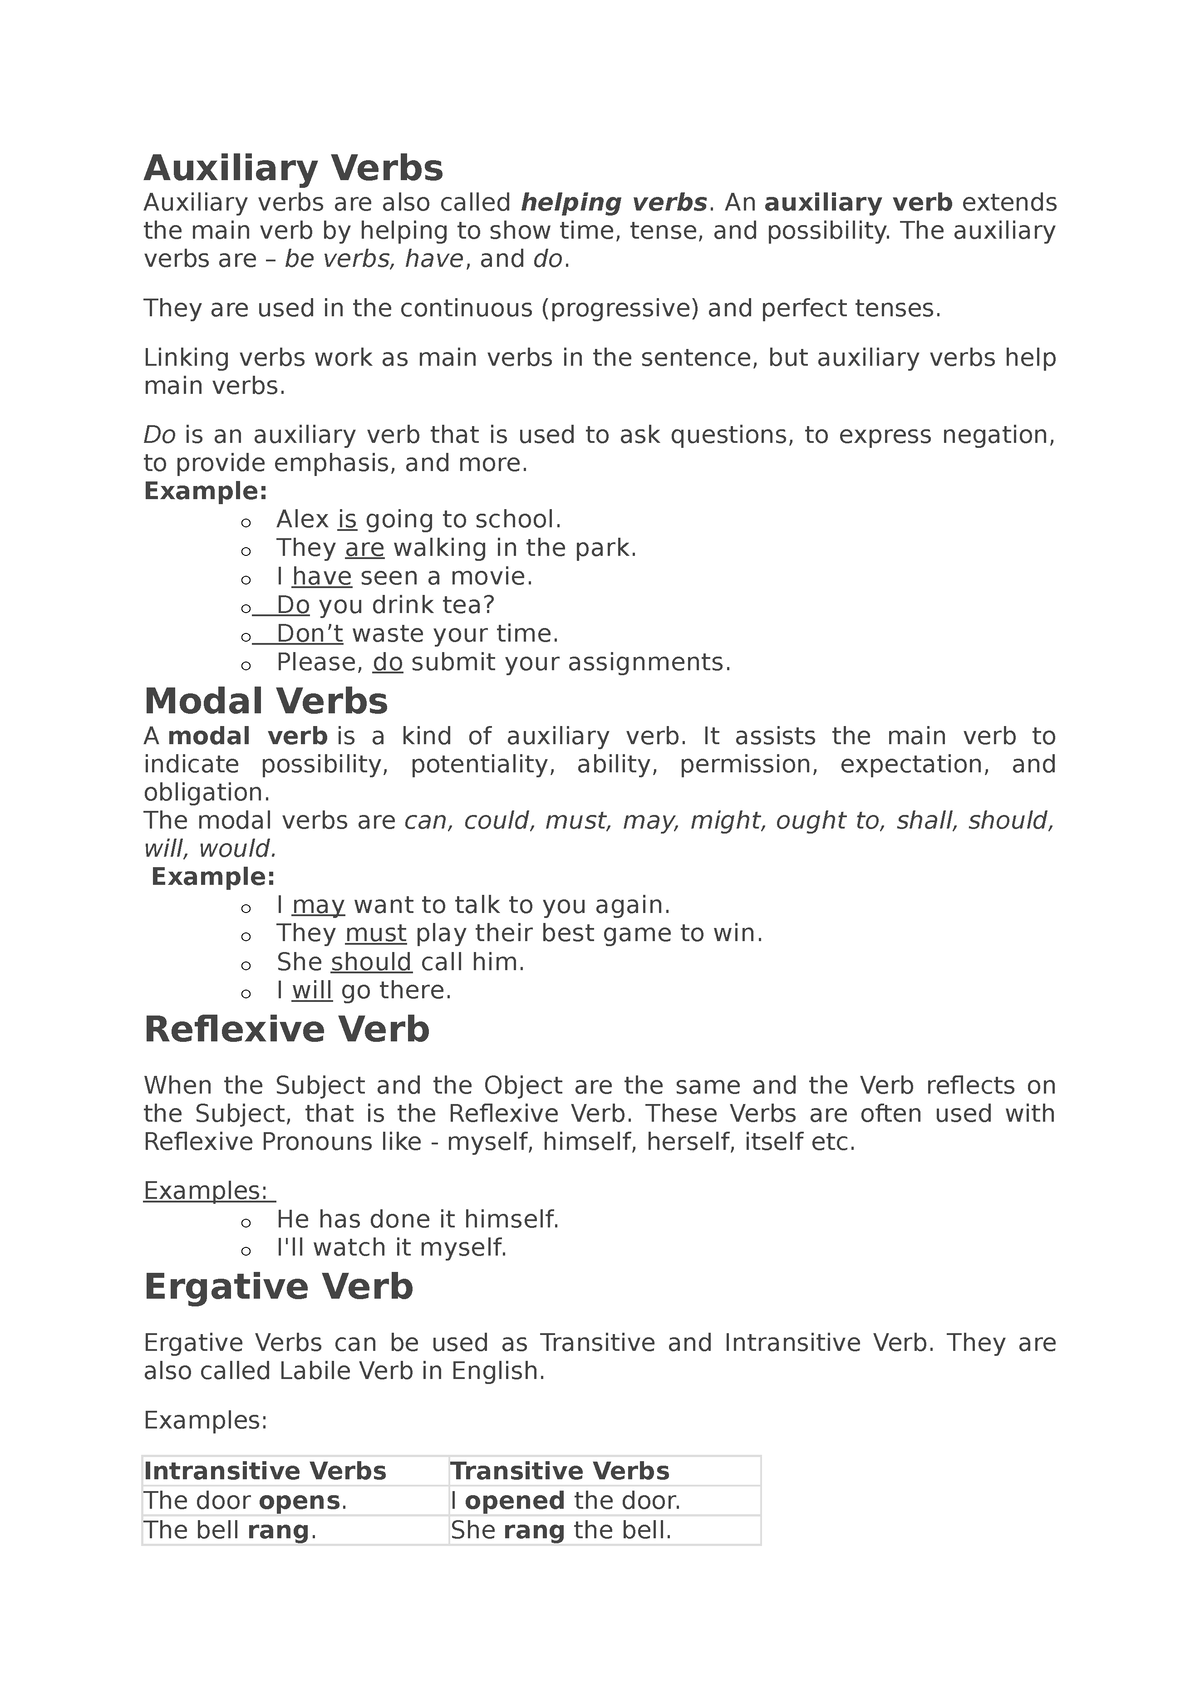 May, might & must - helping verbs worksheets